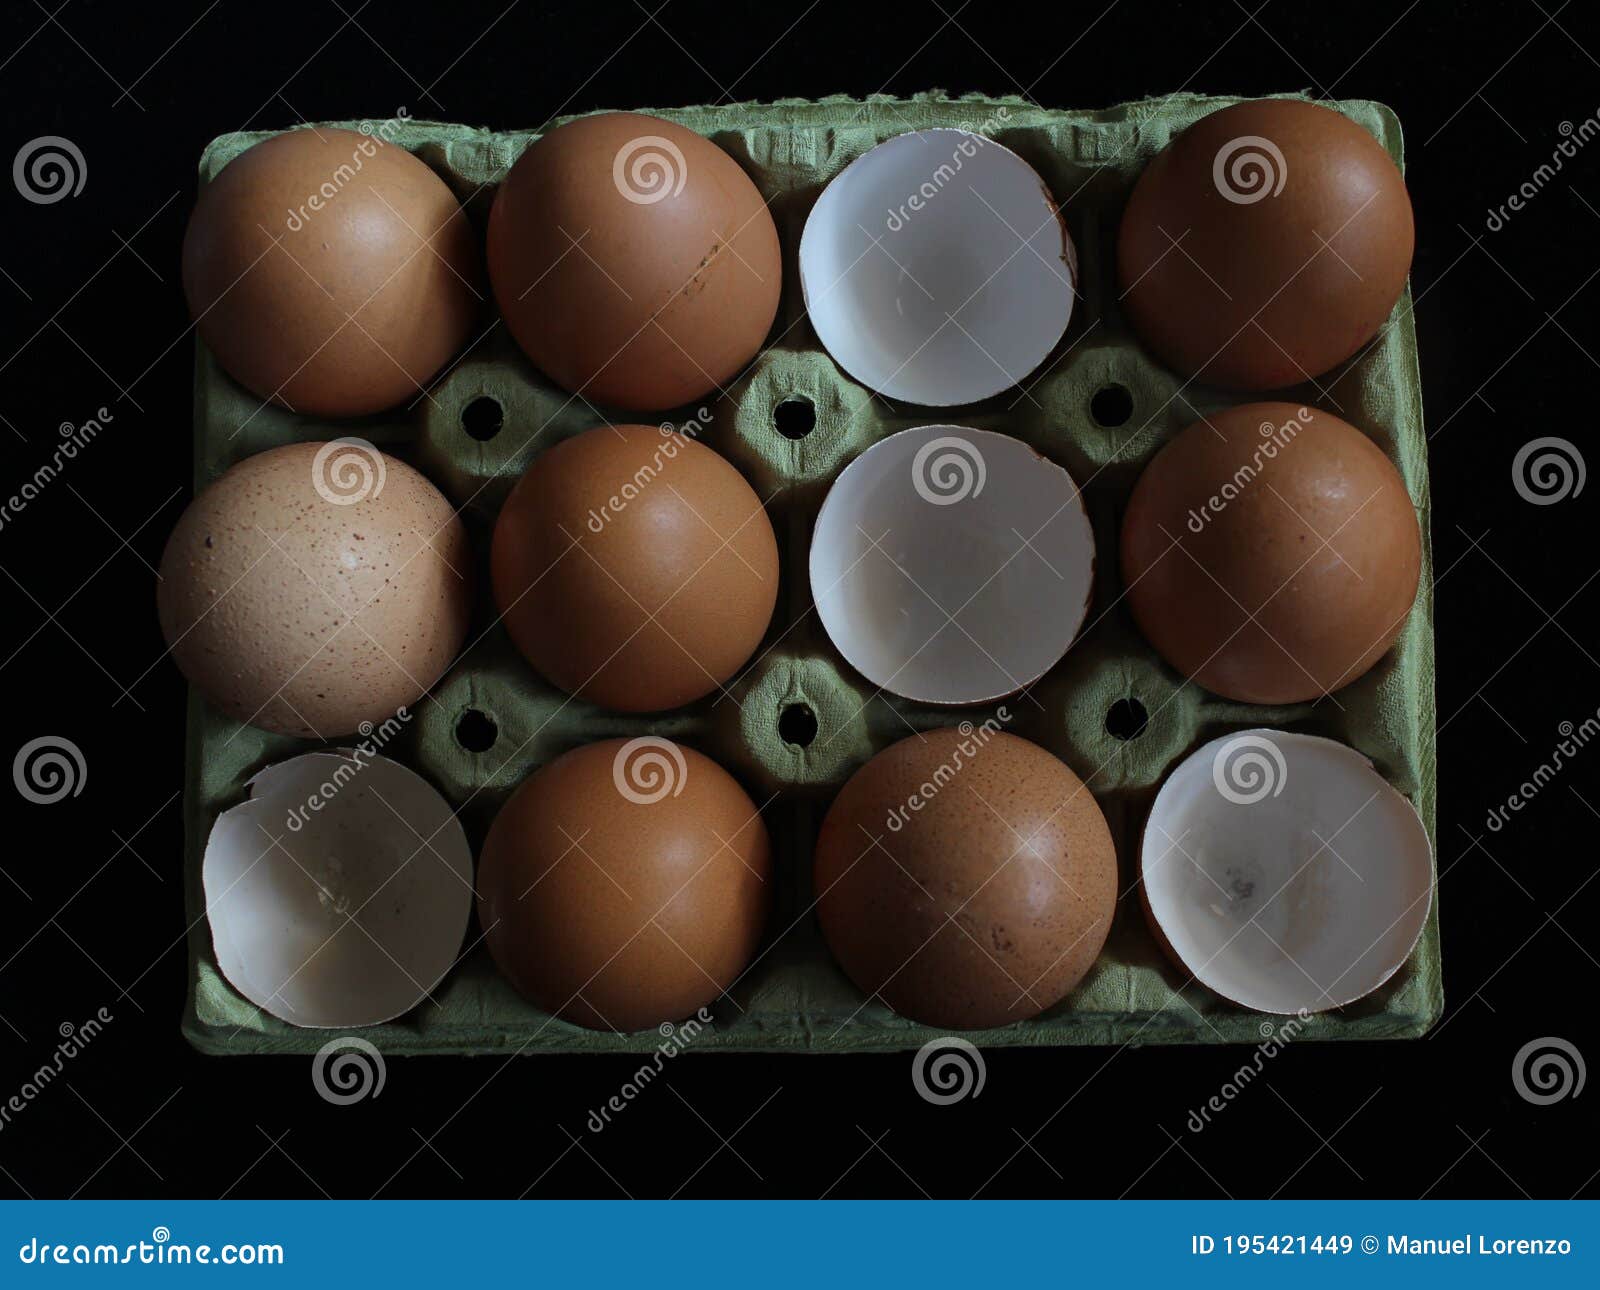 eggs nutrition food shell hen clear yolk